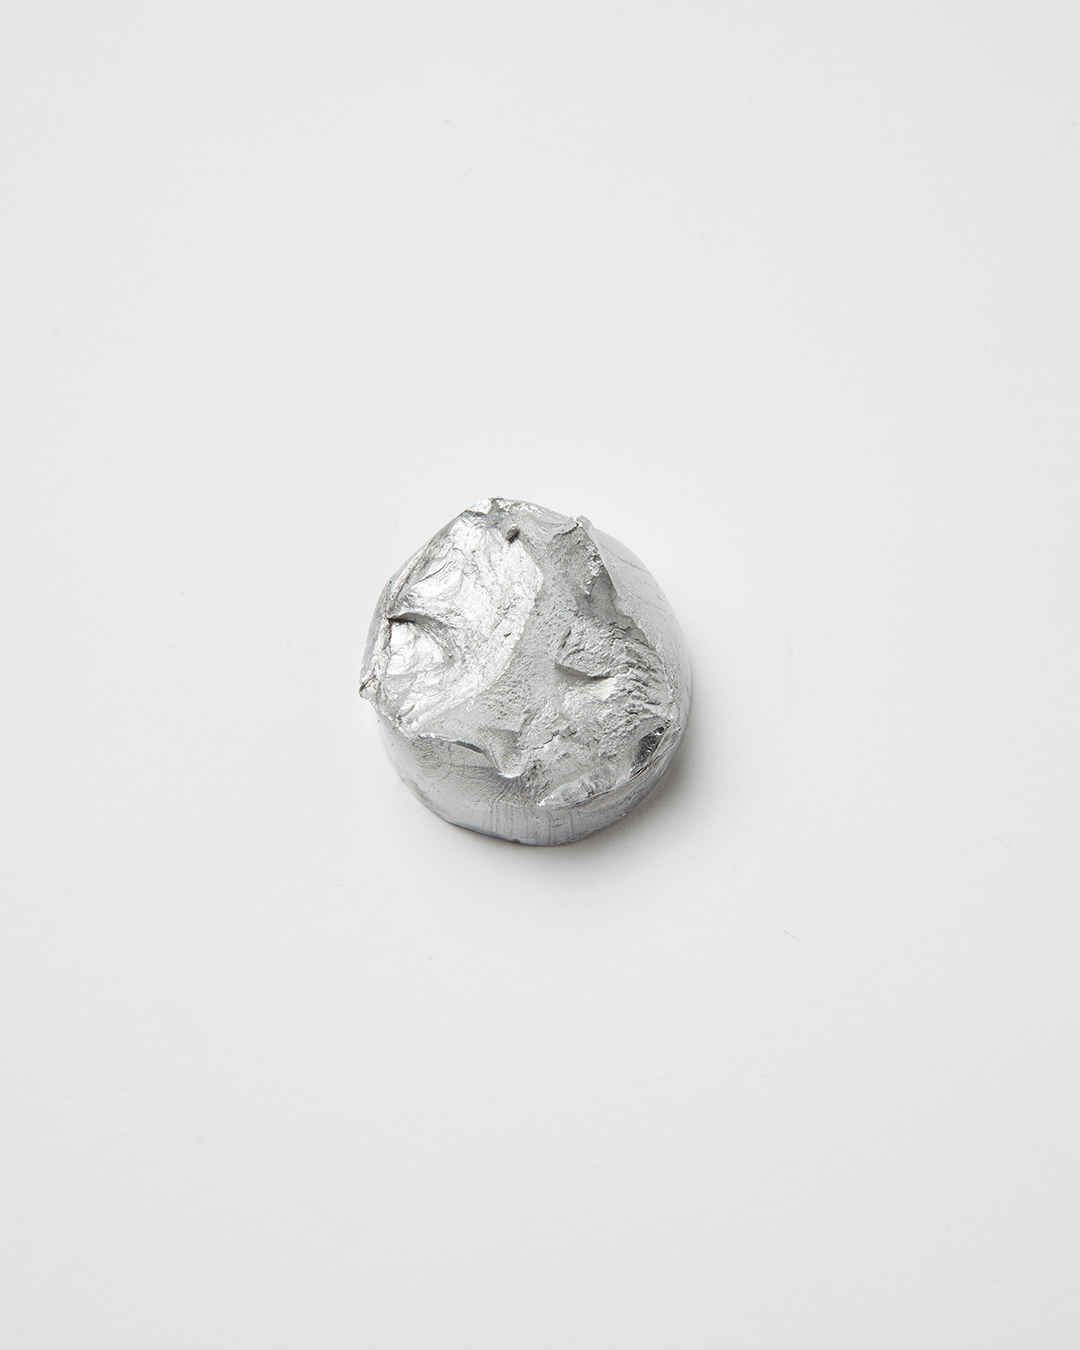 Barbara Schrobenhauser, Ember, 2014, brooch; aluminium, stainless steel ø 35 mm, H 25 mm, €620